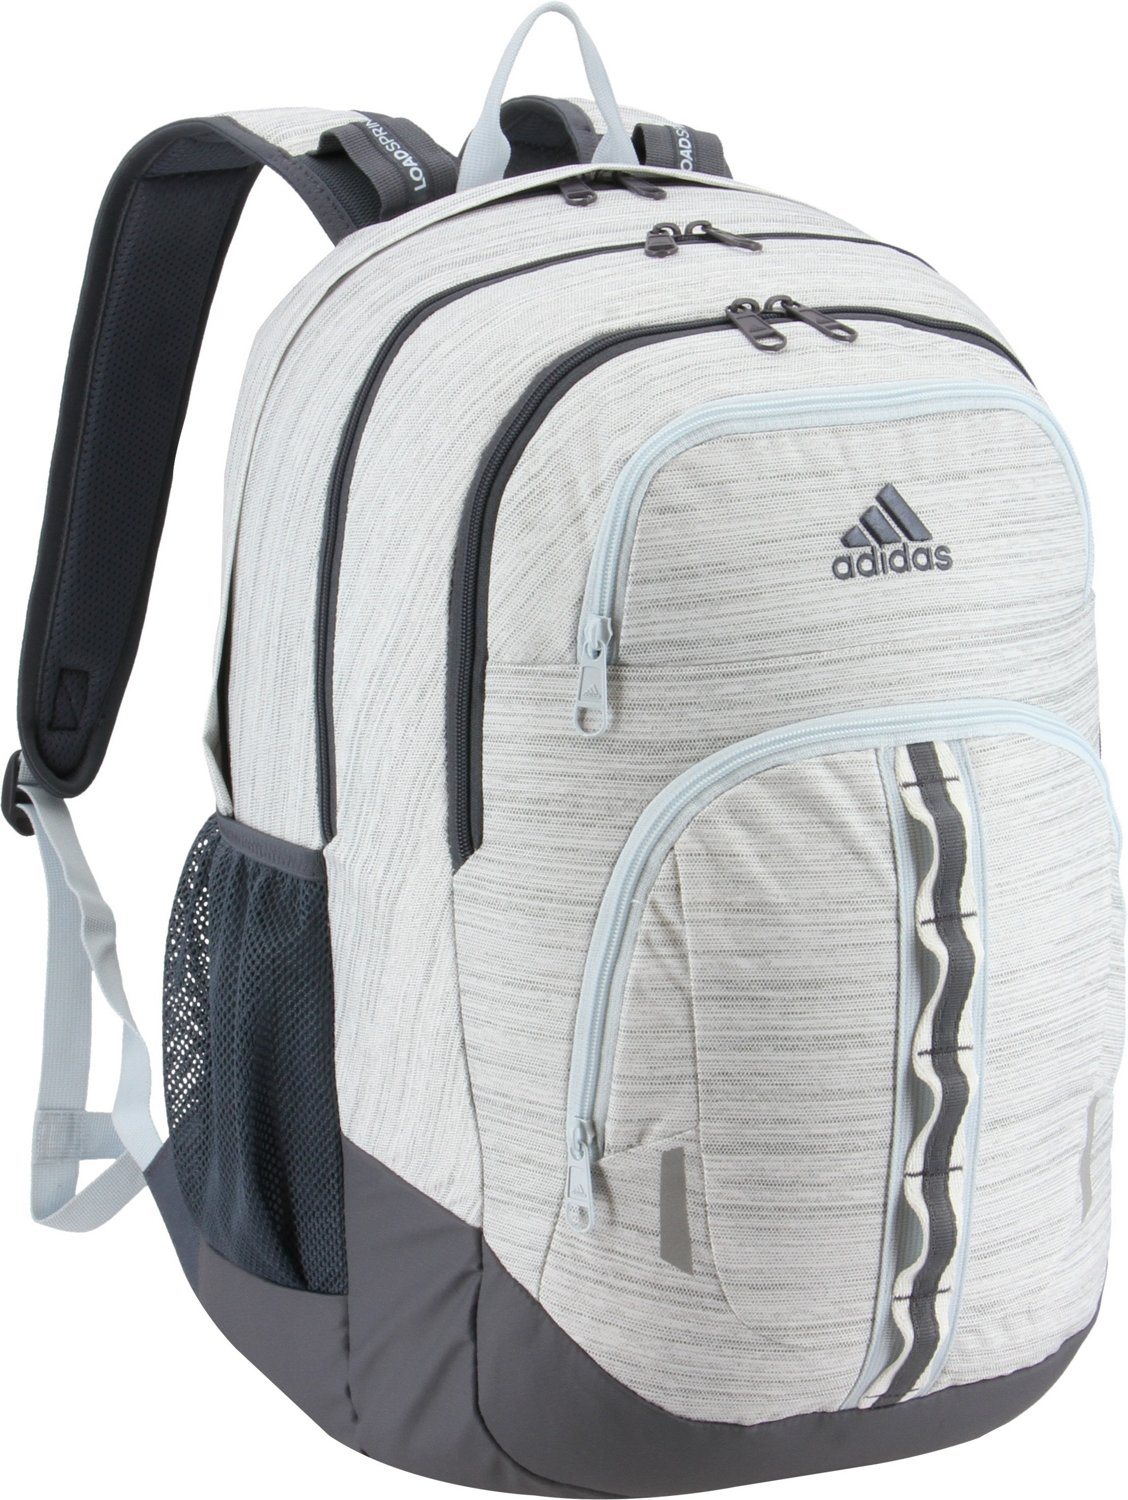 academy sports adidas backpack